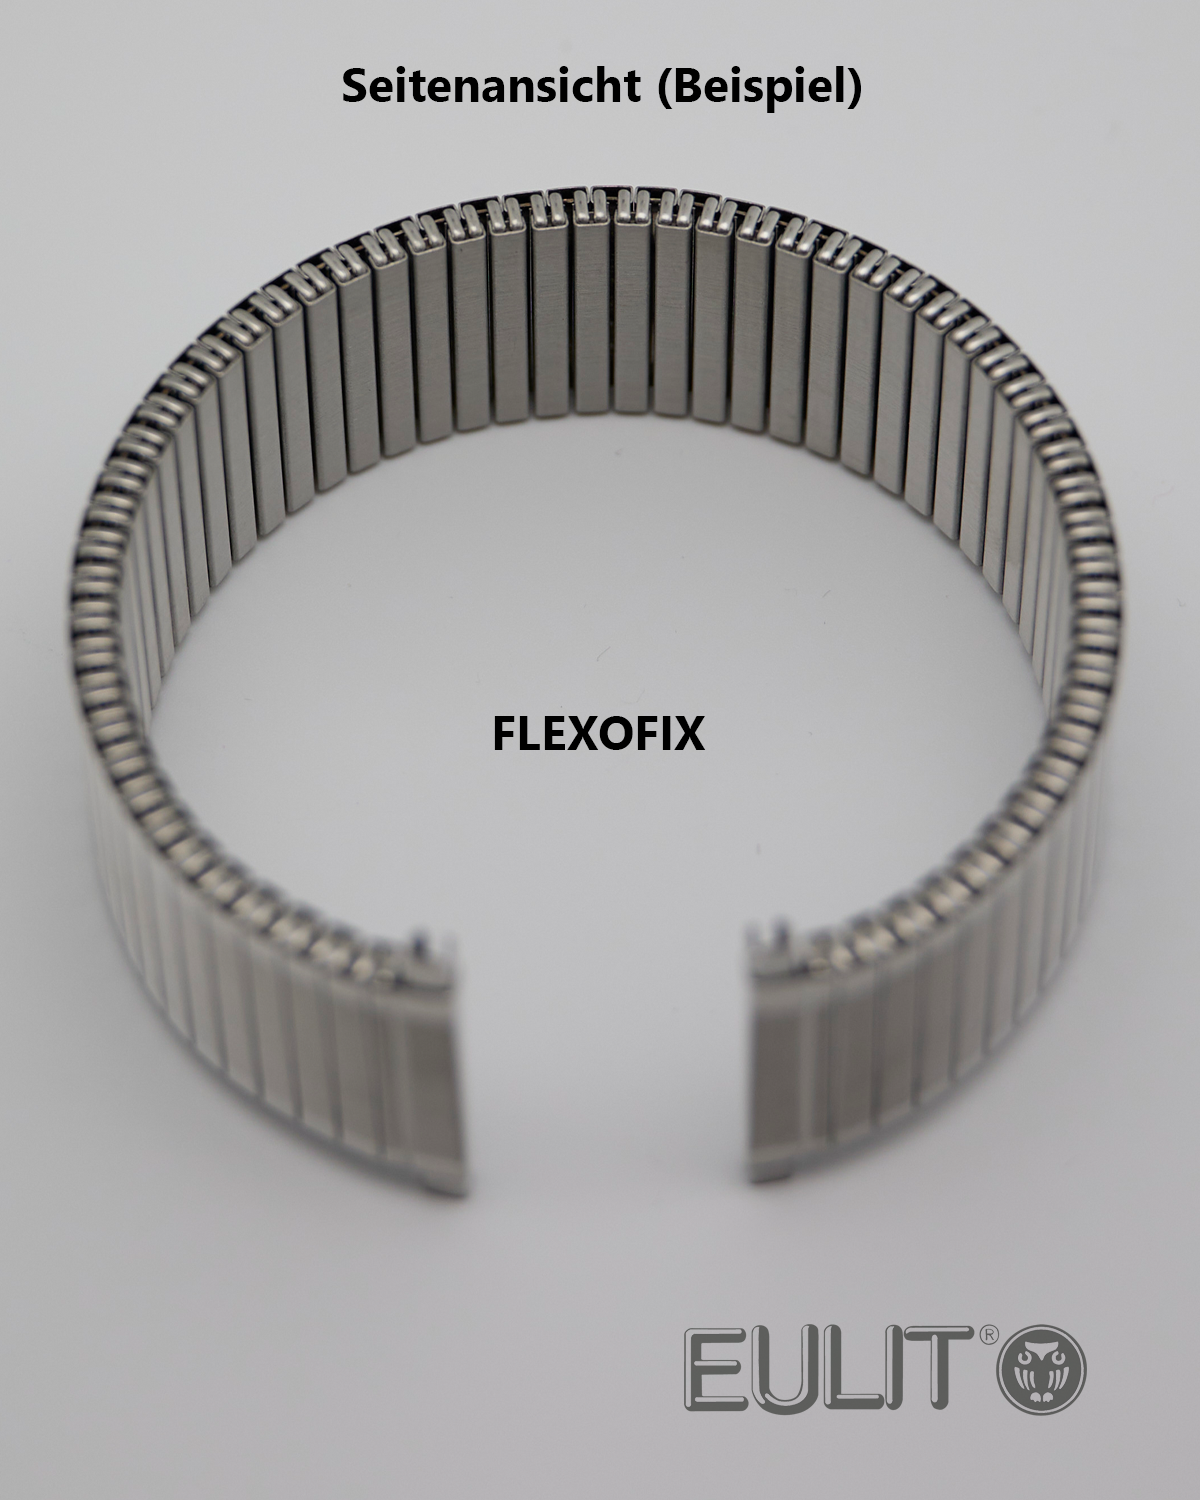 76-413161 EULIT FLEXOFIX 16-18 mm Bicolor